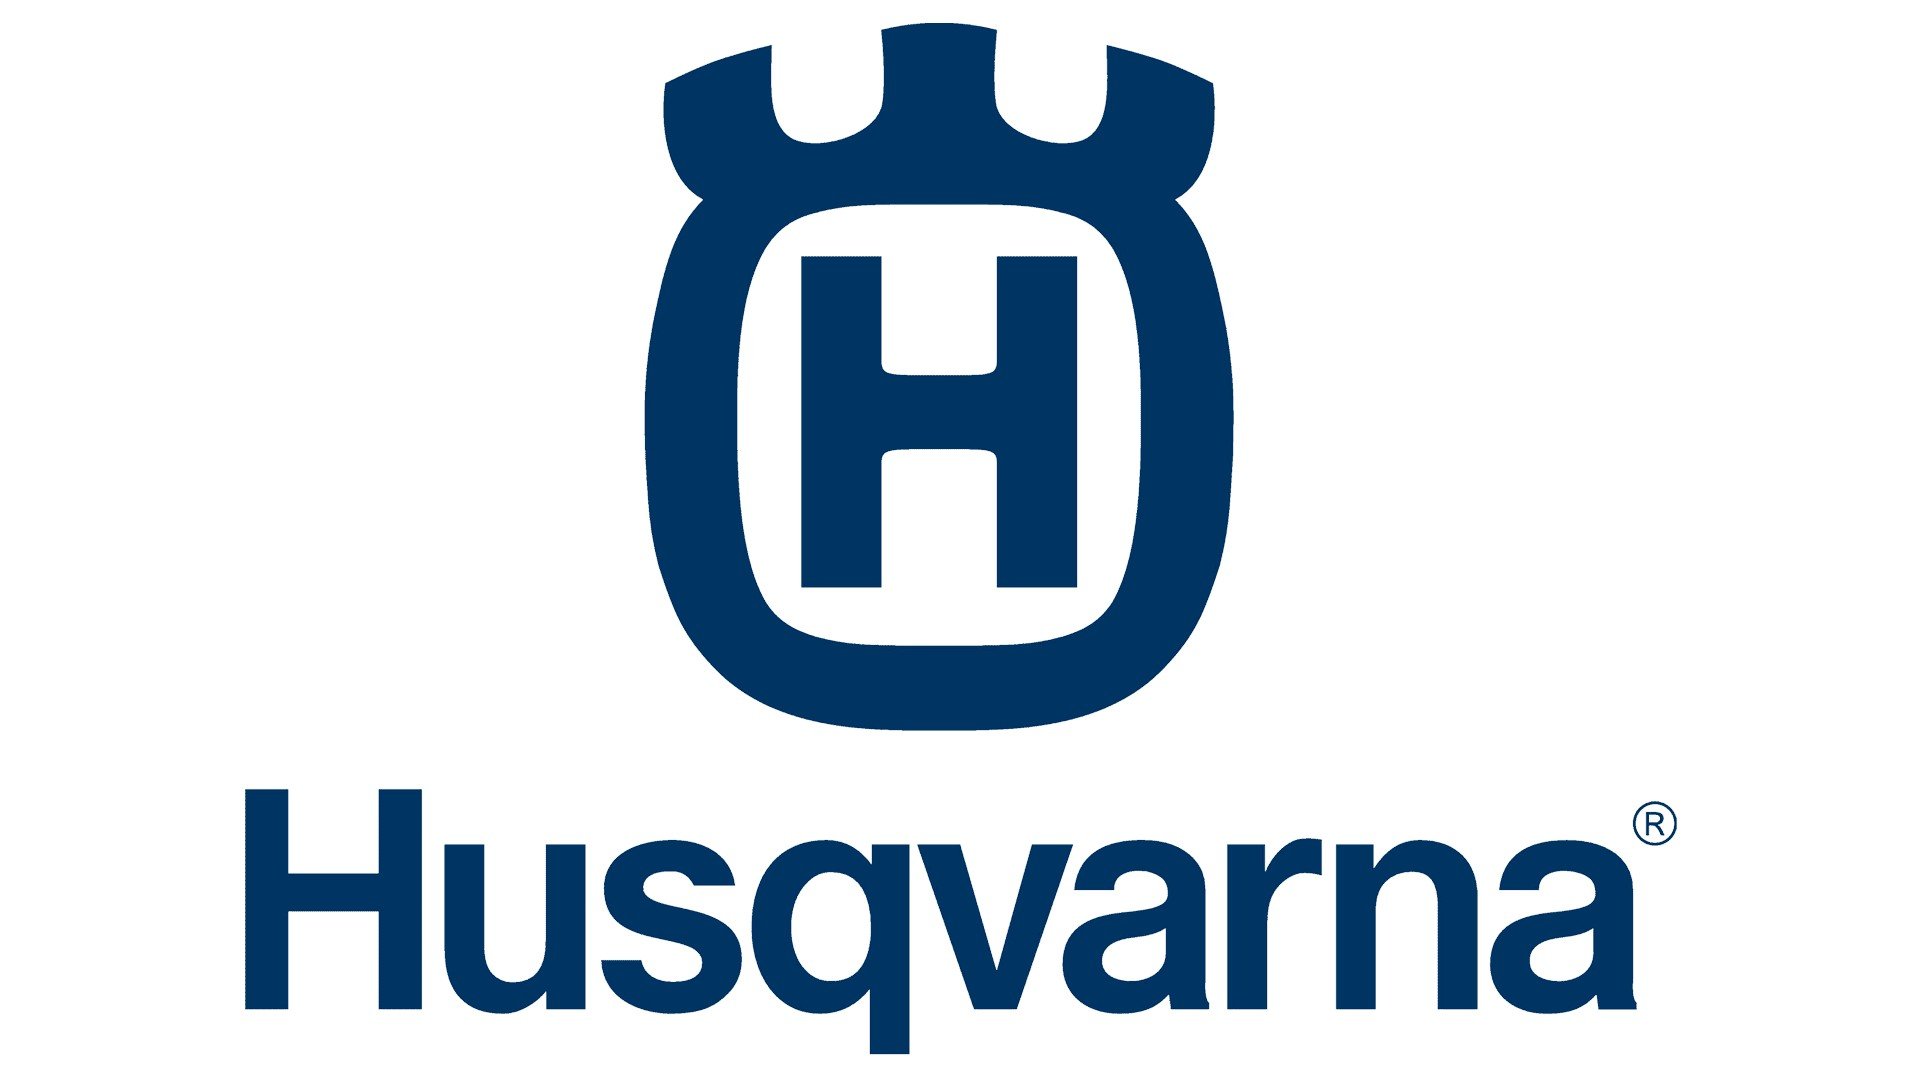 JMI Supply Offers Husqvarna Brand Municipal and Construction Supplies